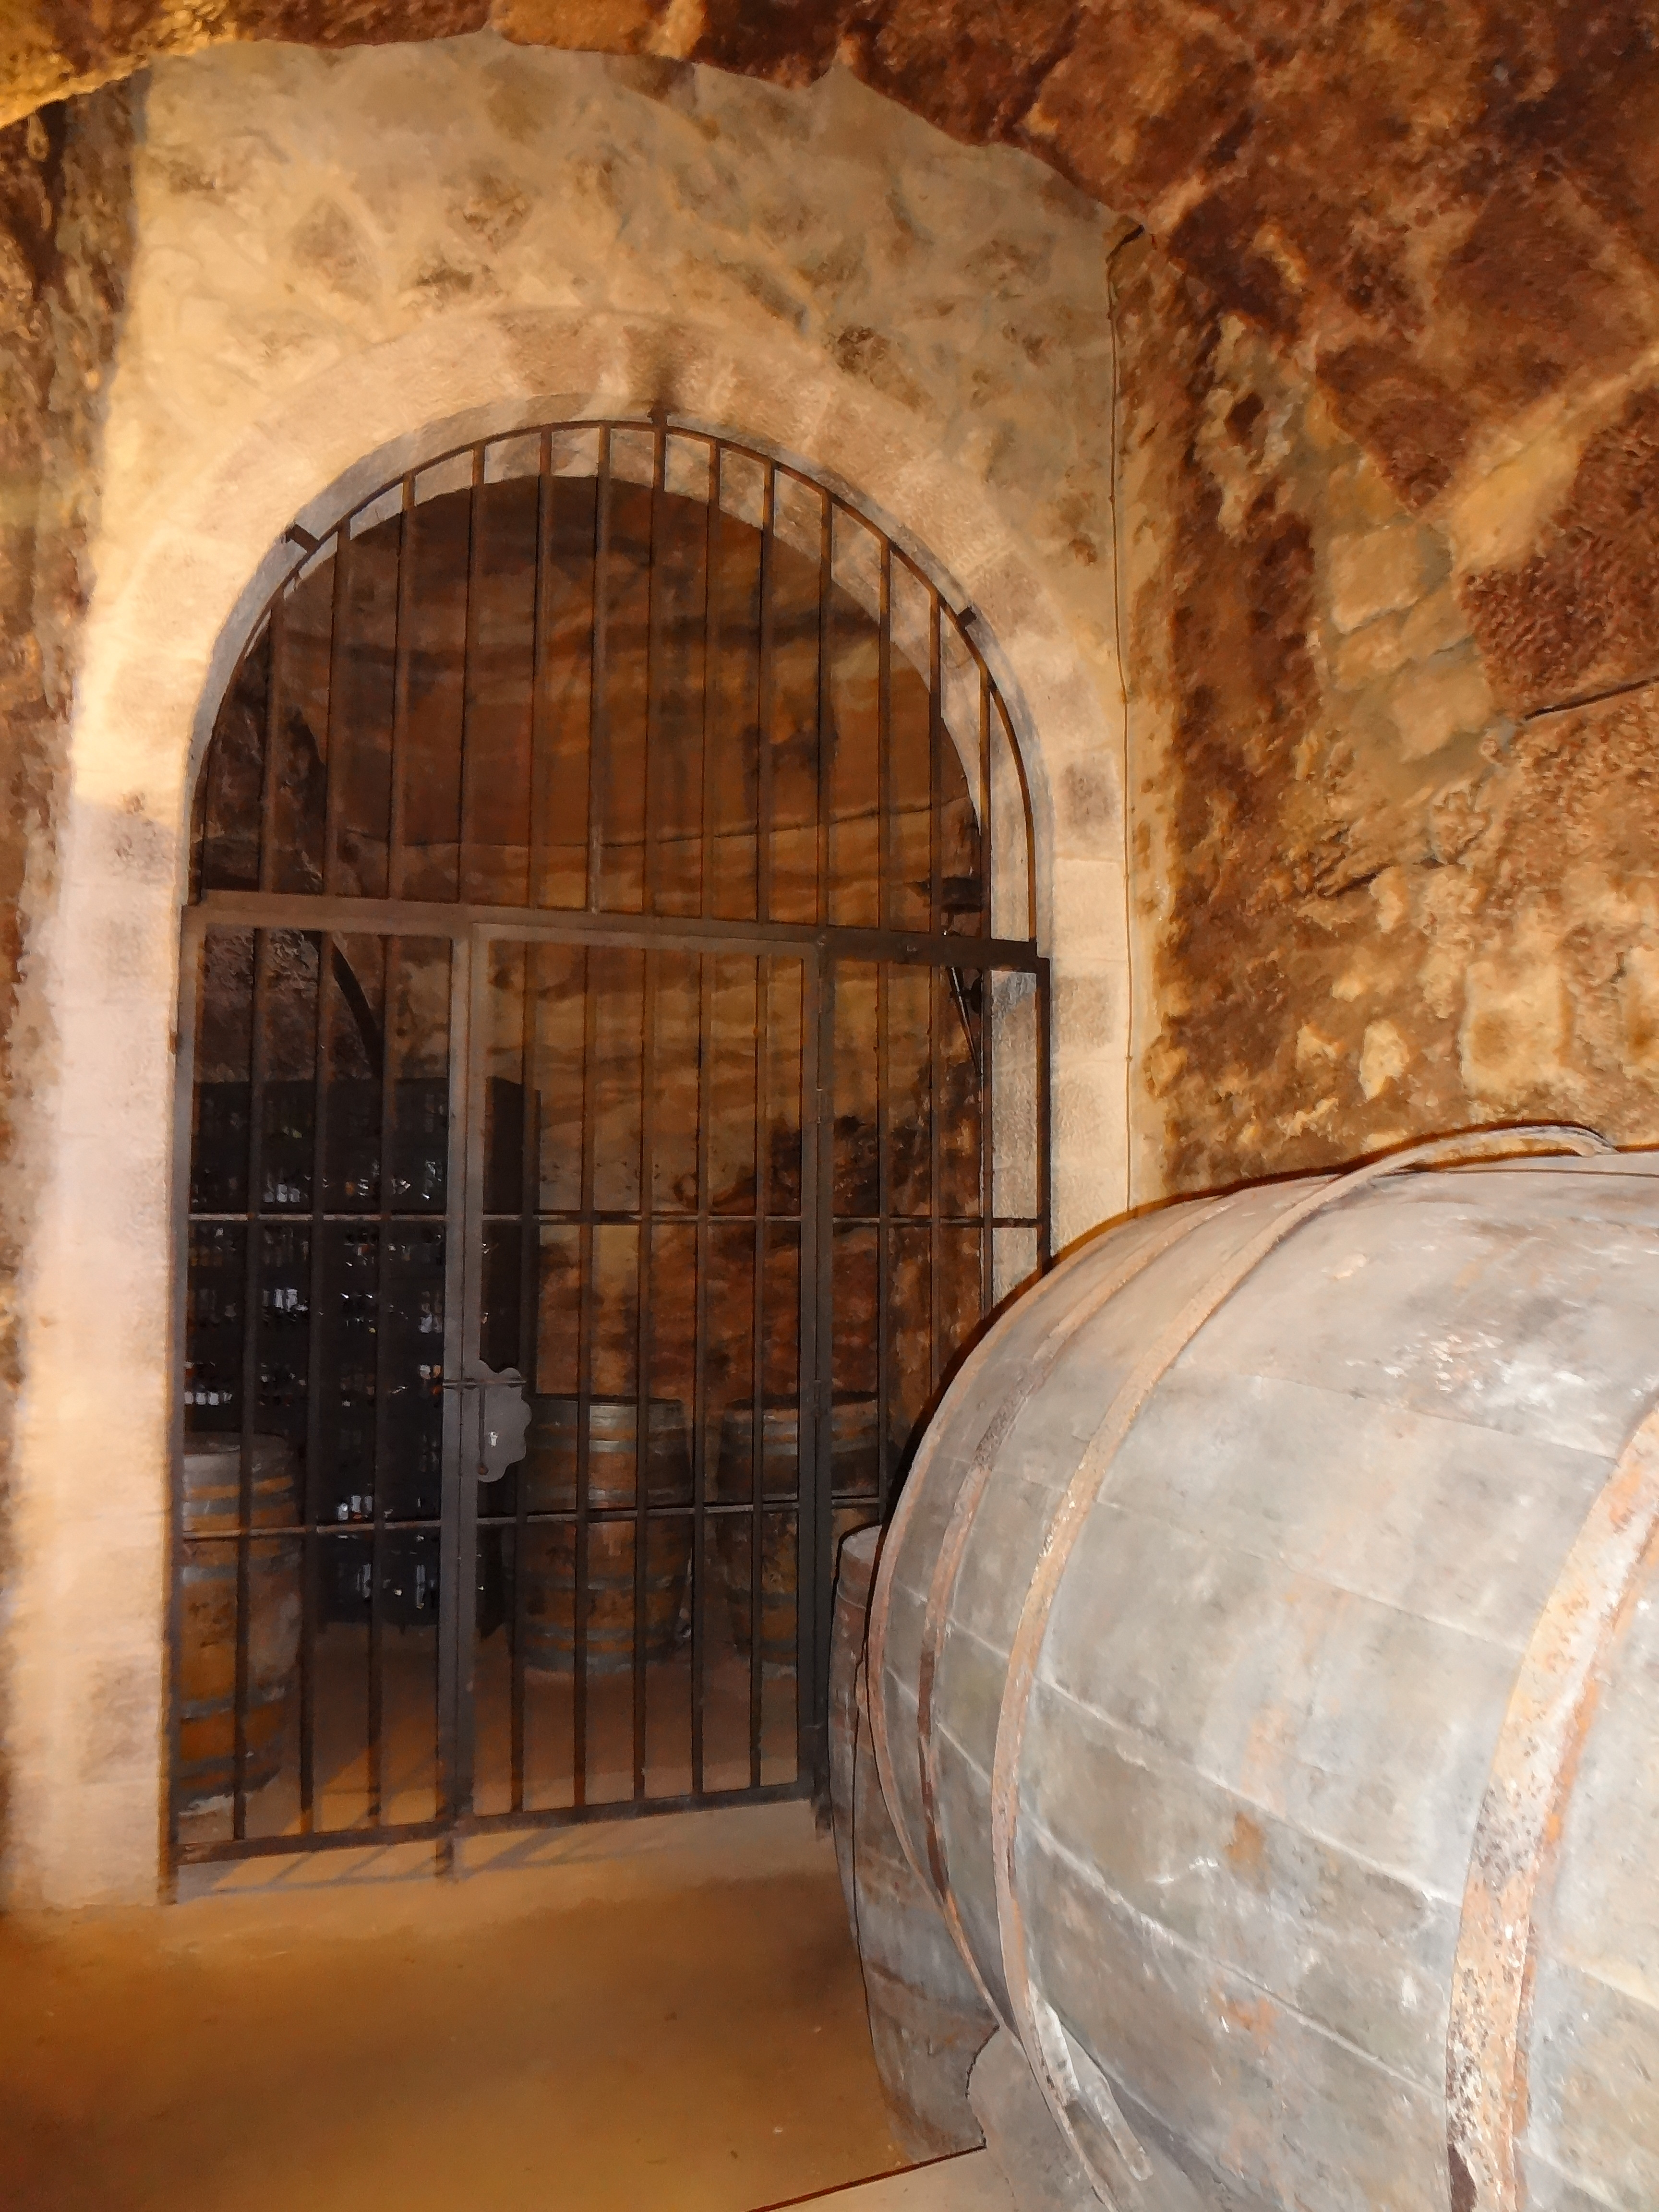 Best ideas about Underground Wine Cellar
. Save or Pin File Peña El Chilindrón Aranda de Duero España pic Now.